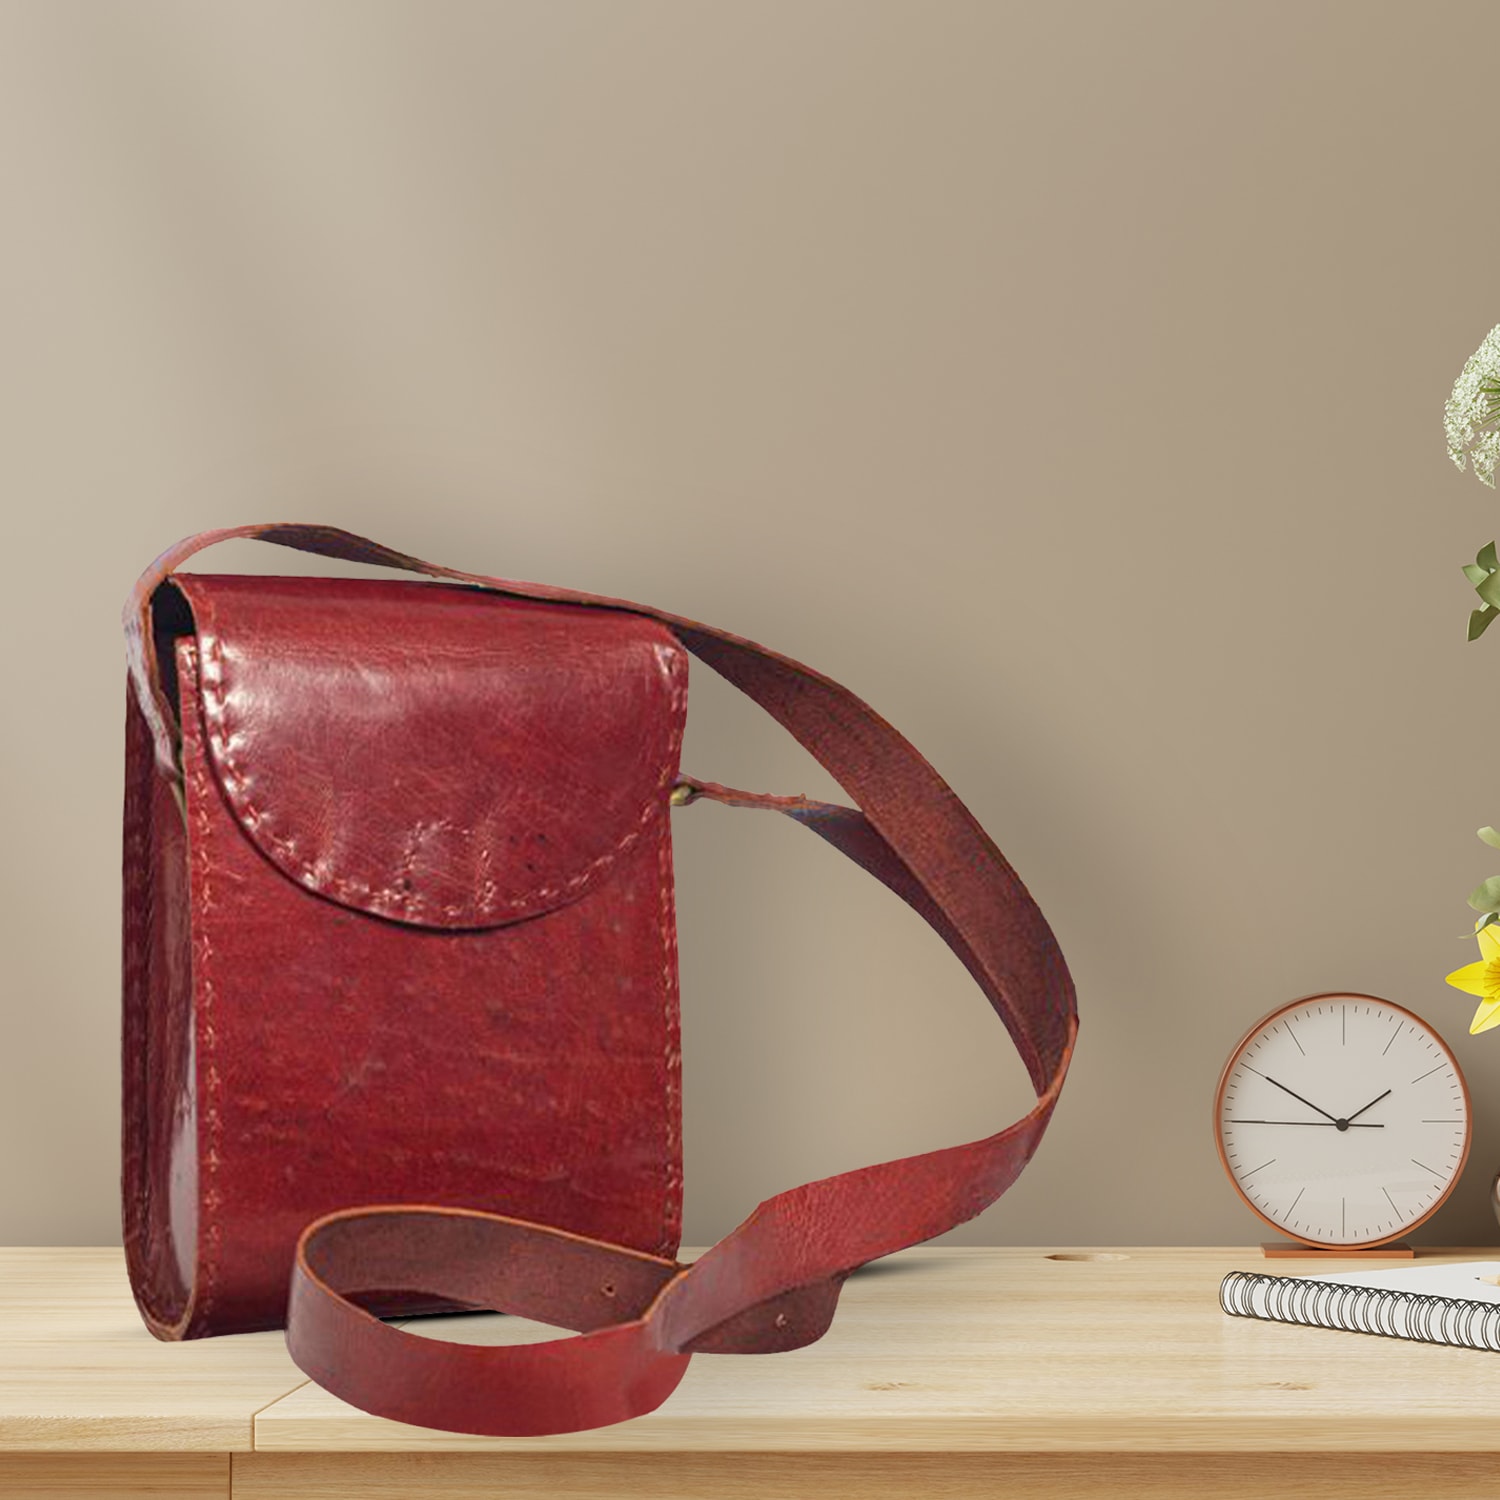 Shop Pure Leather Handbags for Women Online – Hidesign